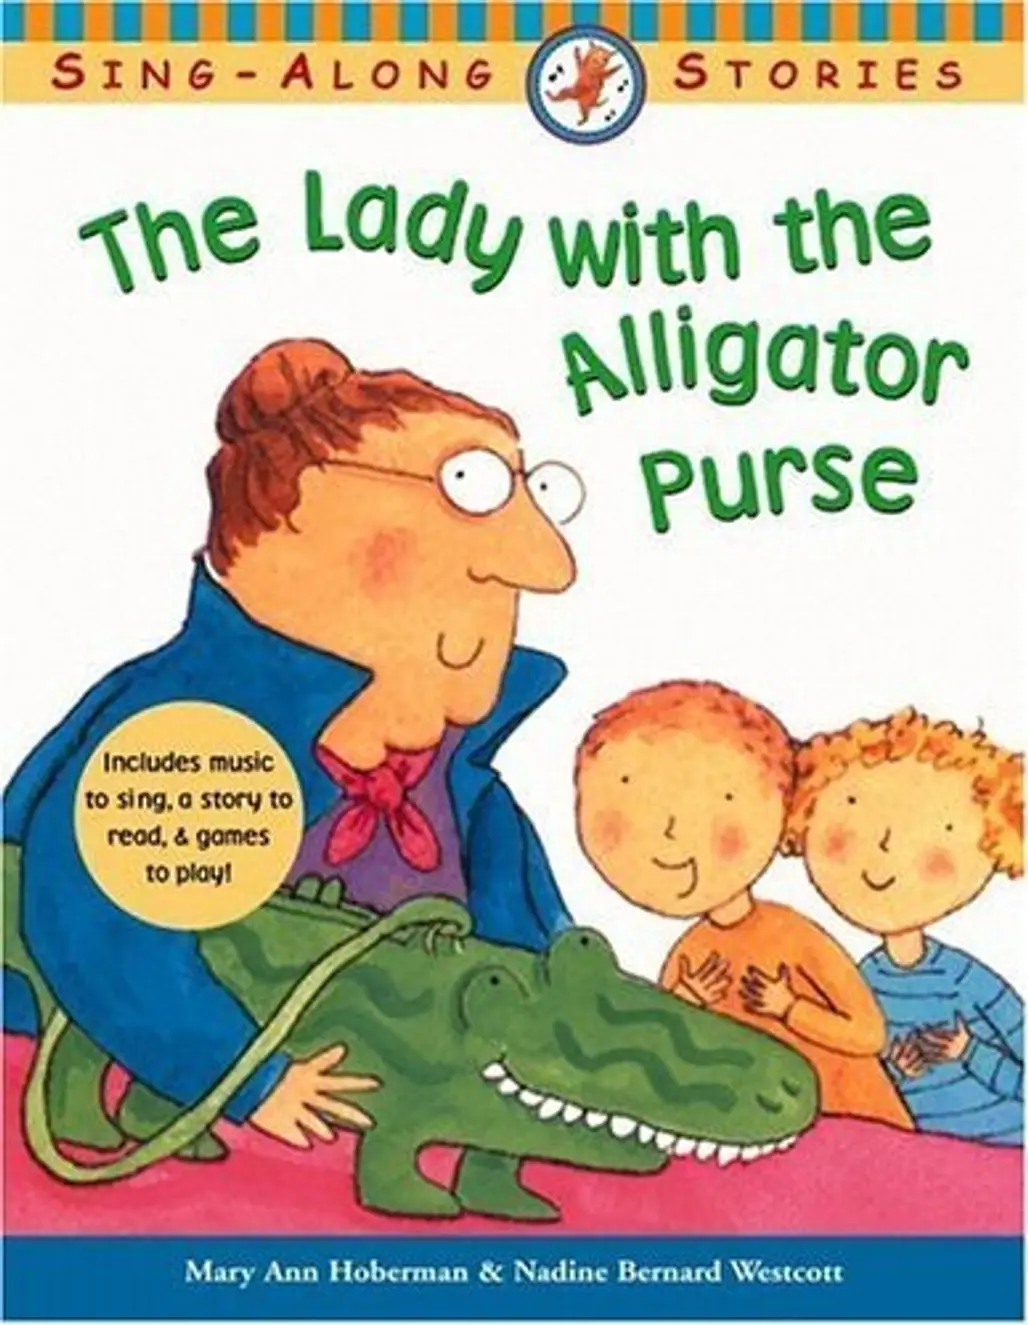 The Lady with the Alligator Purse by Nadine Bernard Westcott